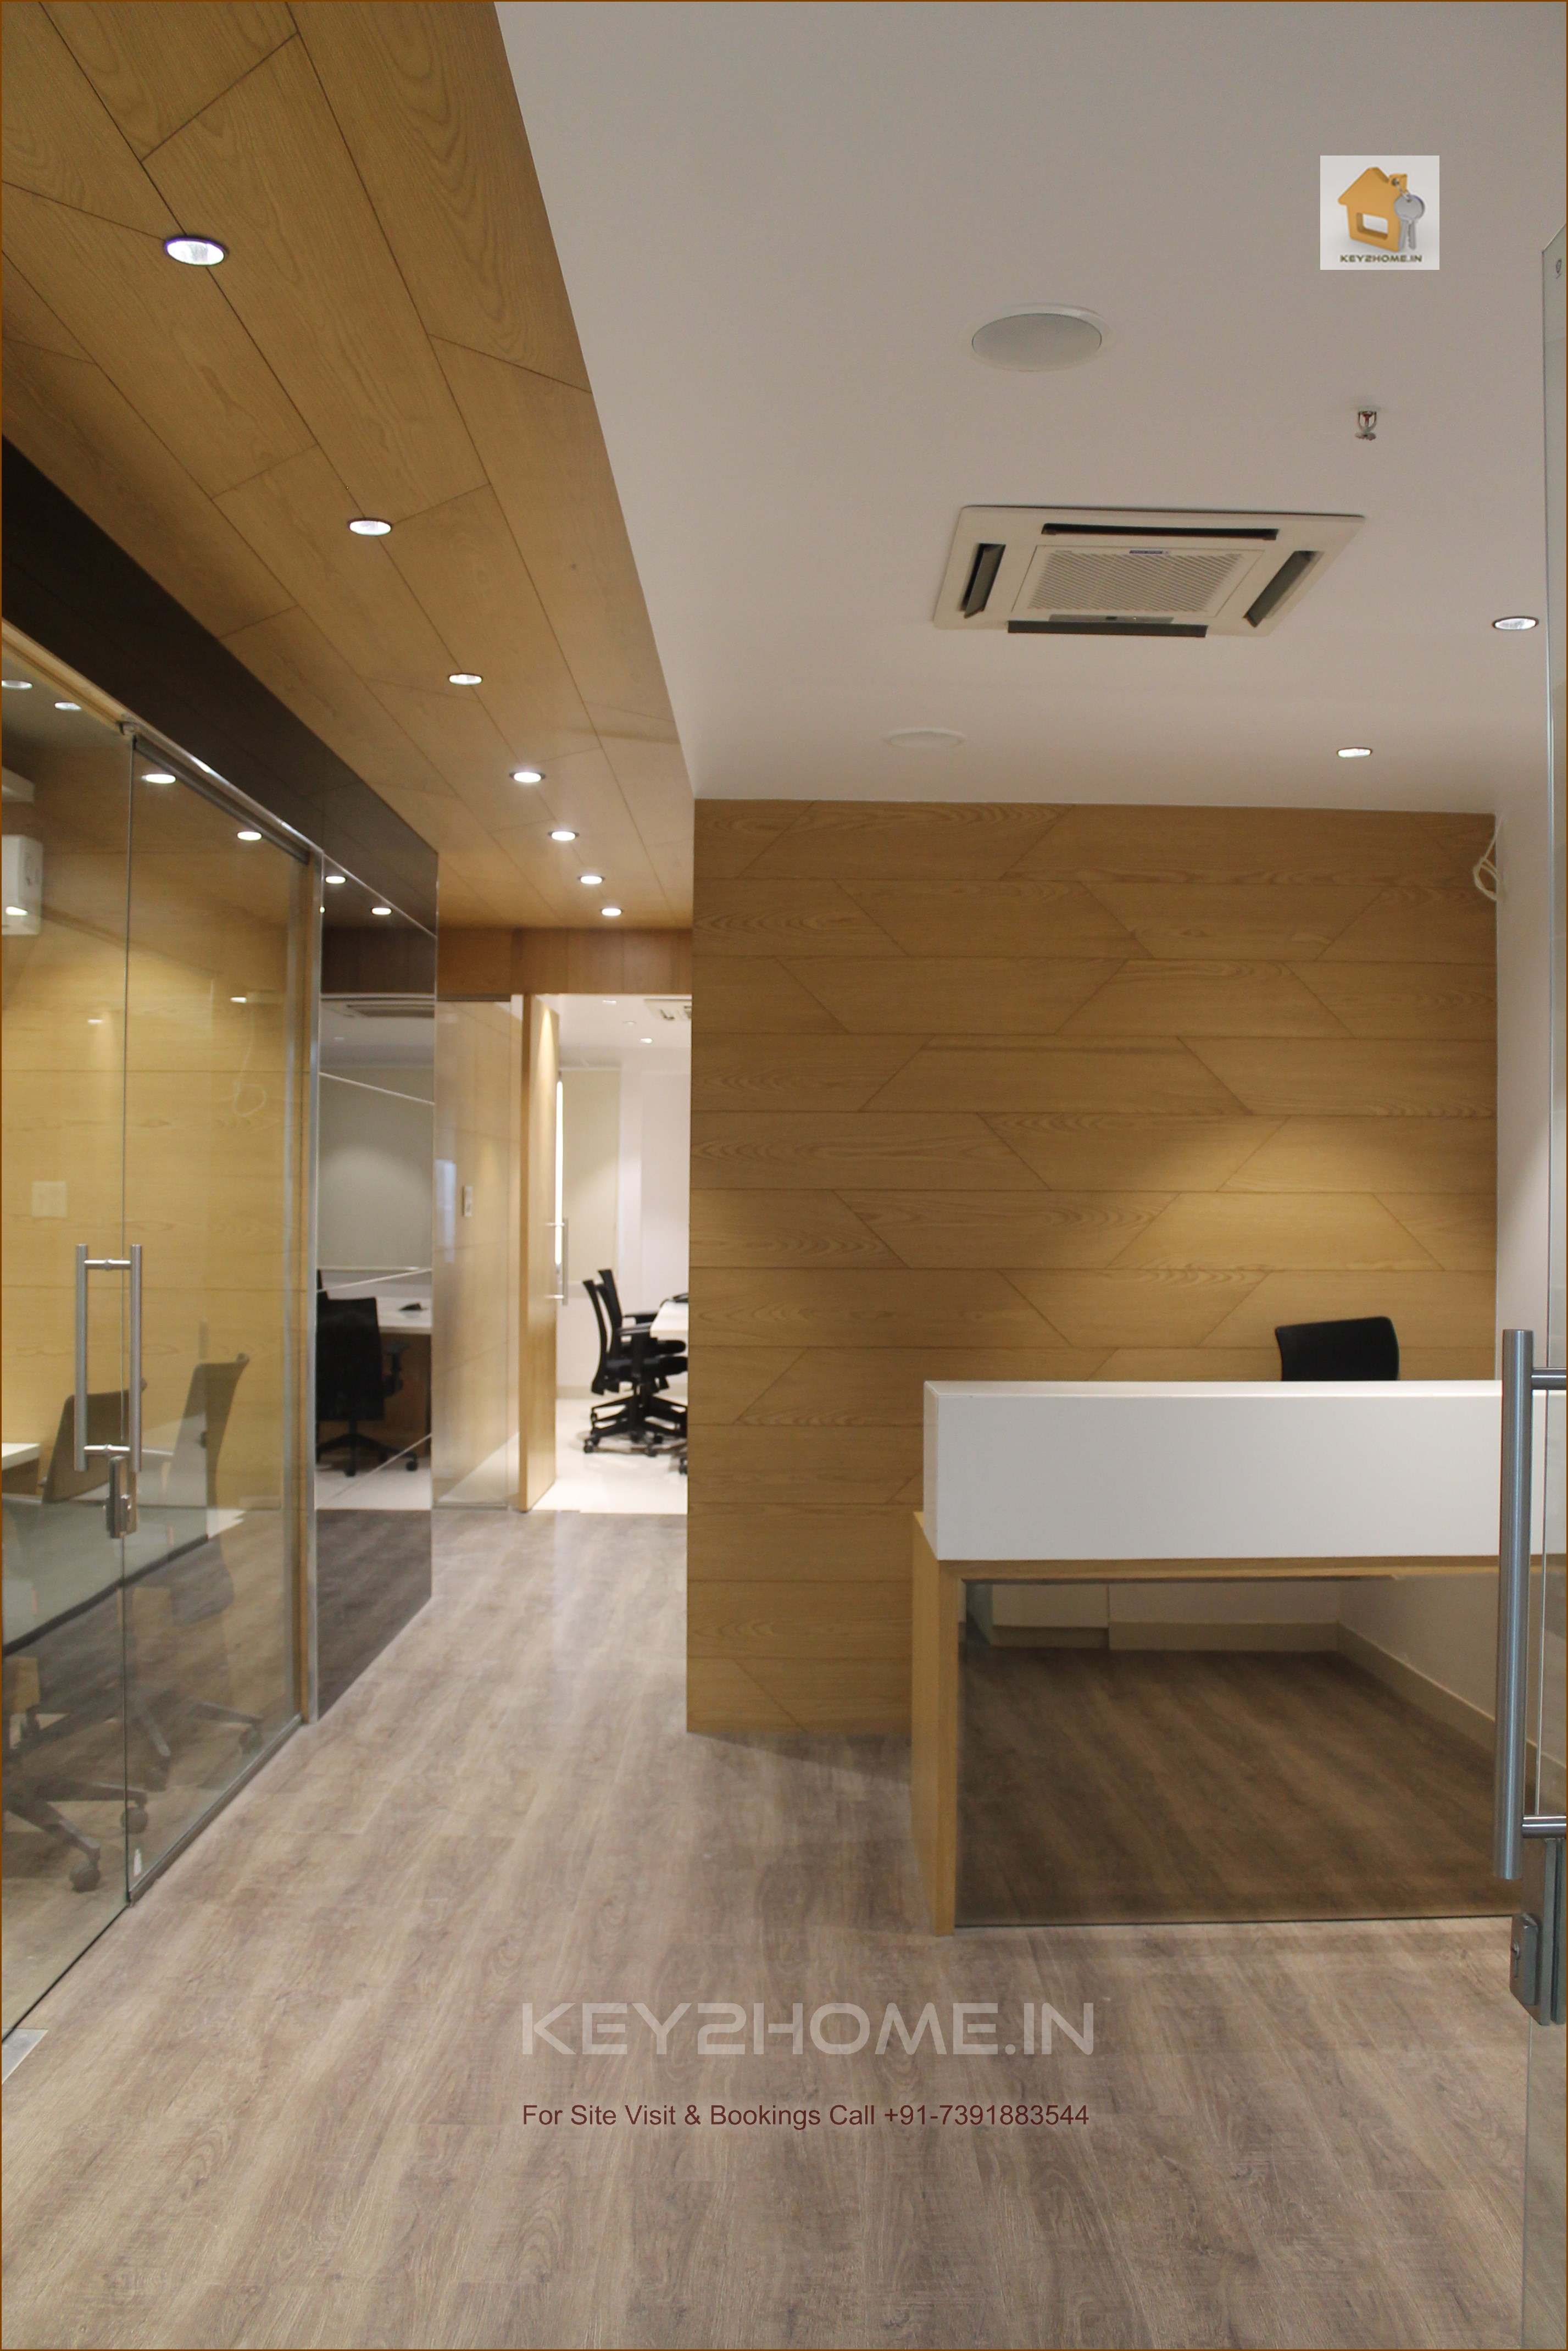 Commercial Office space on rent in Hinjewadi near wakad bridge reception area